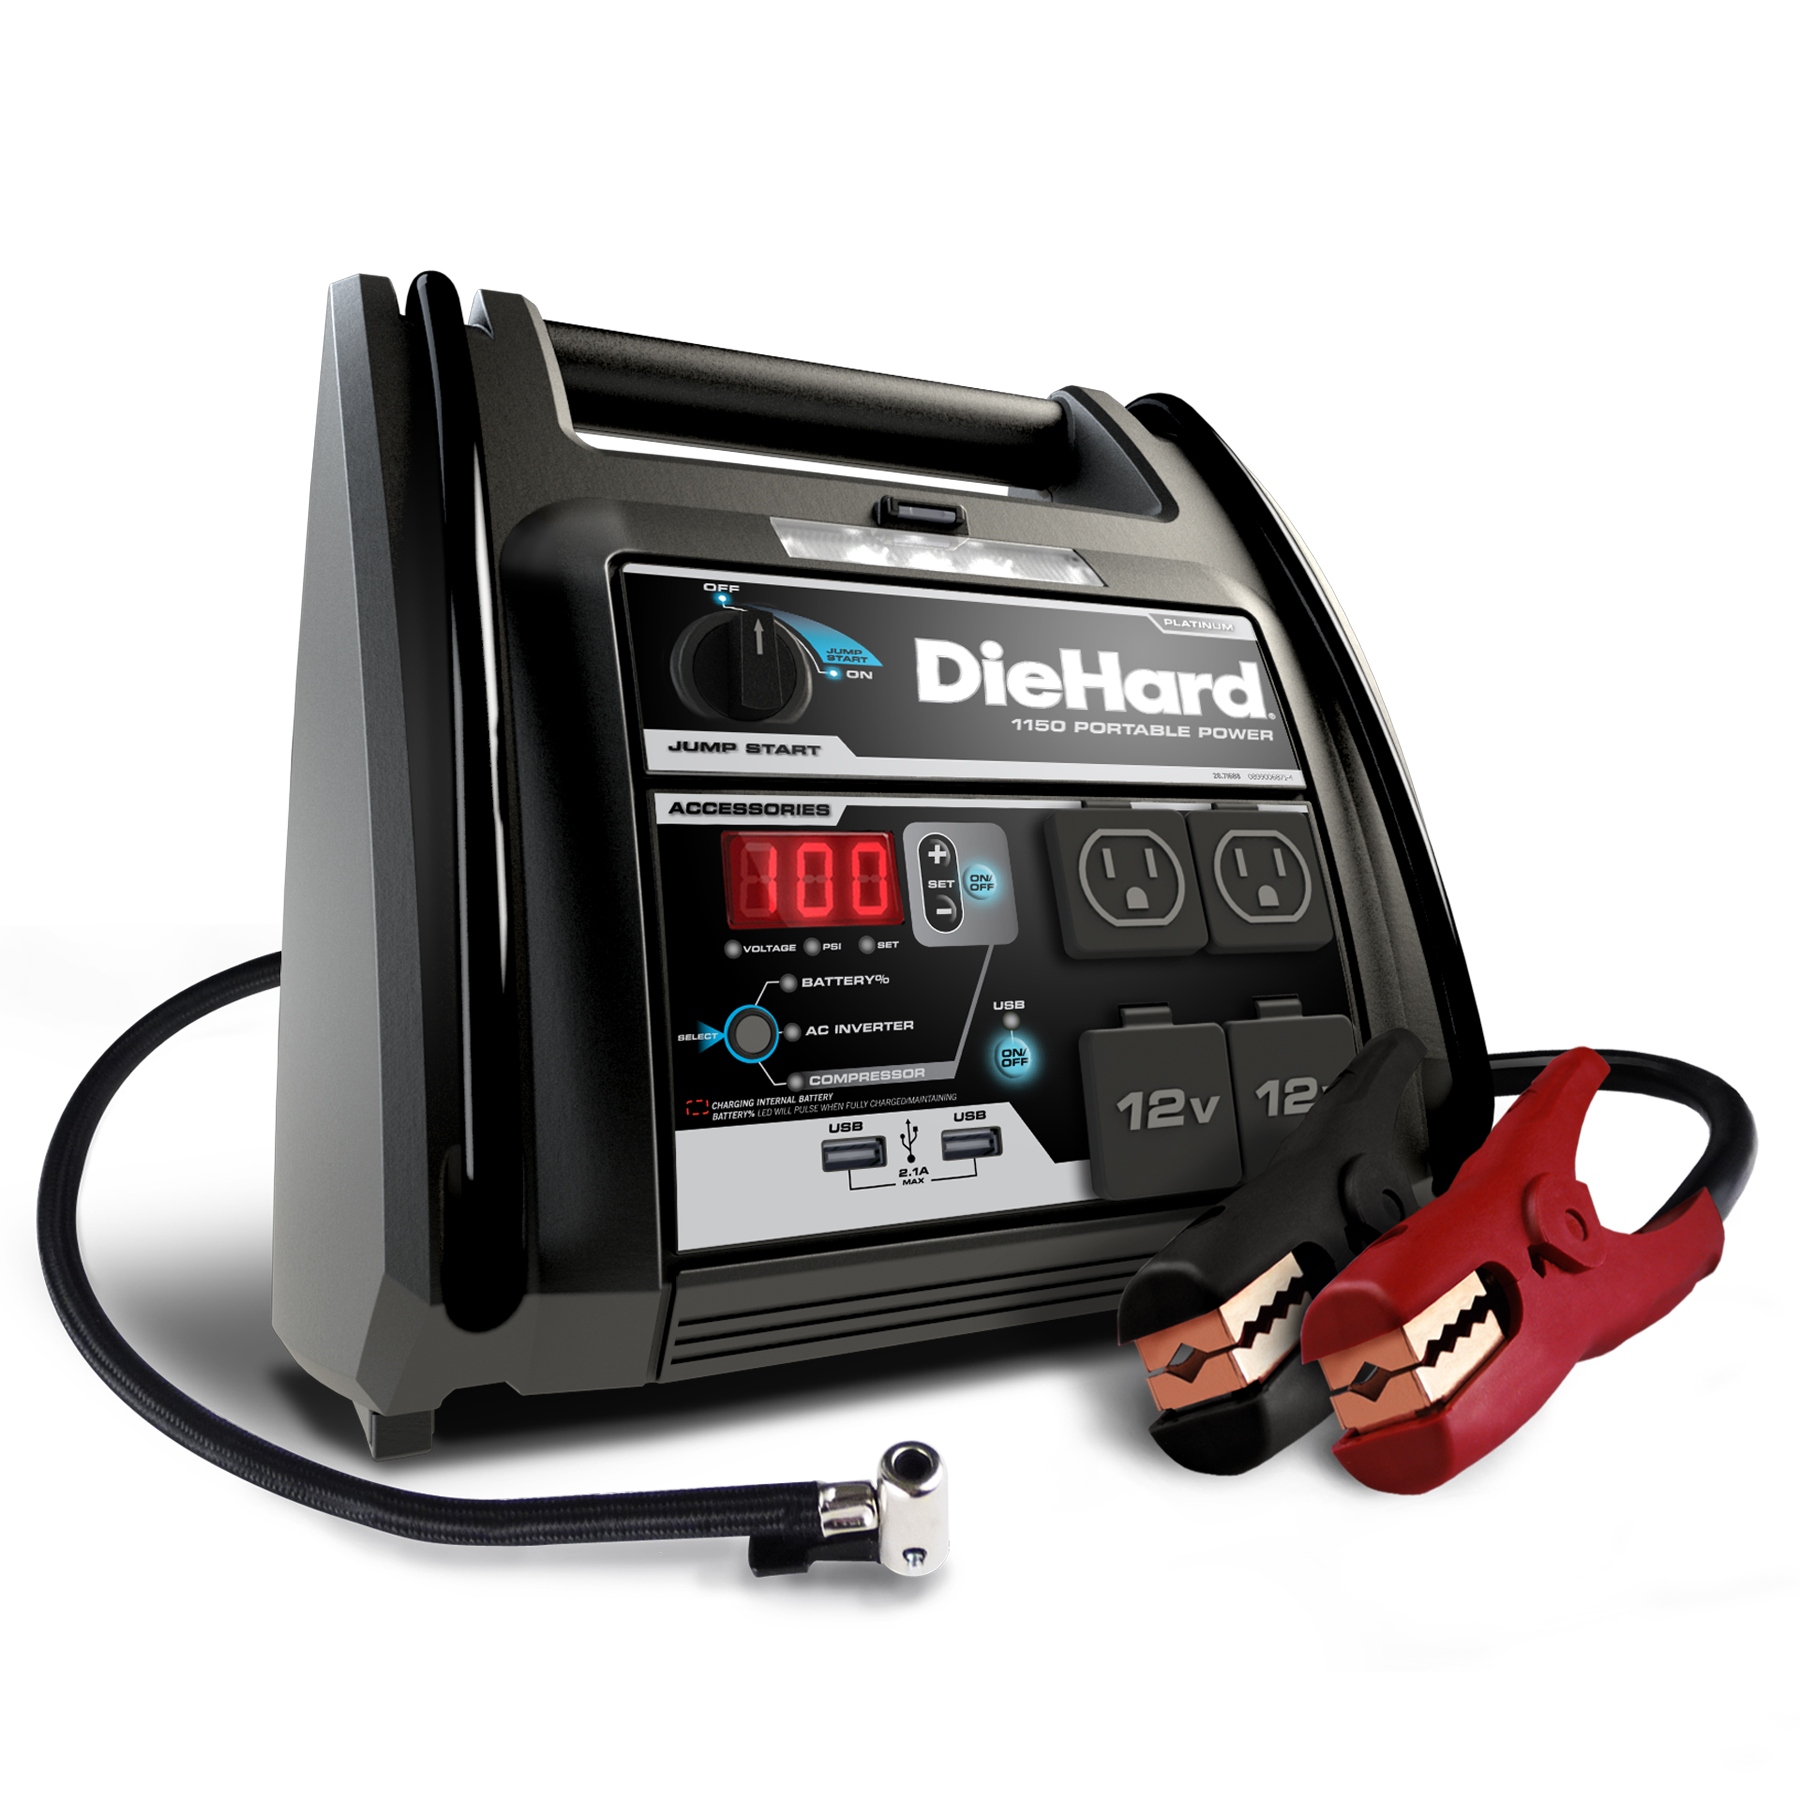 DieHard Platinum Portable Power 1150 Diehard 1150 Portable Power Not Charging